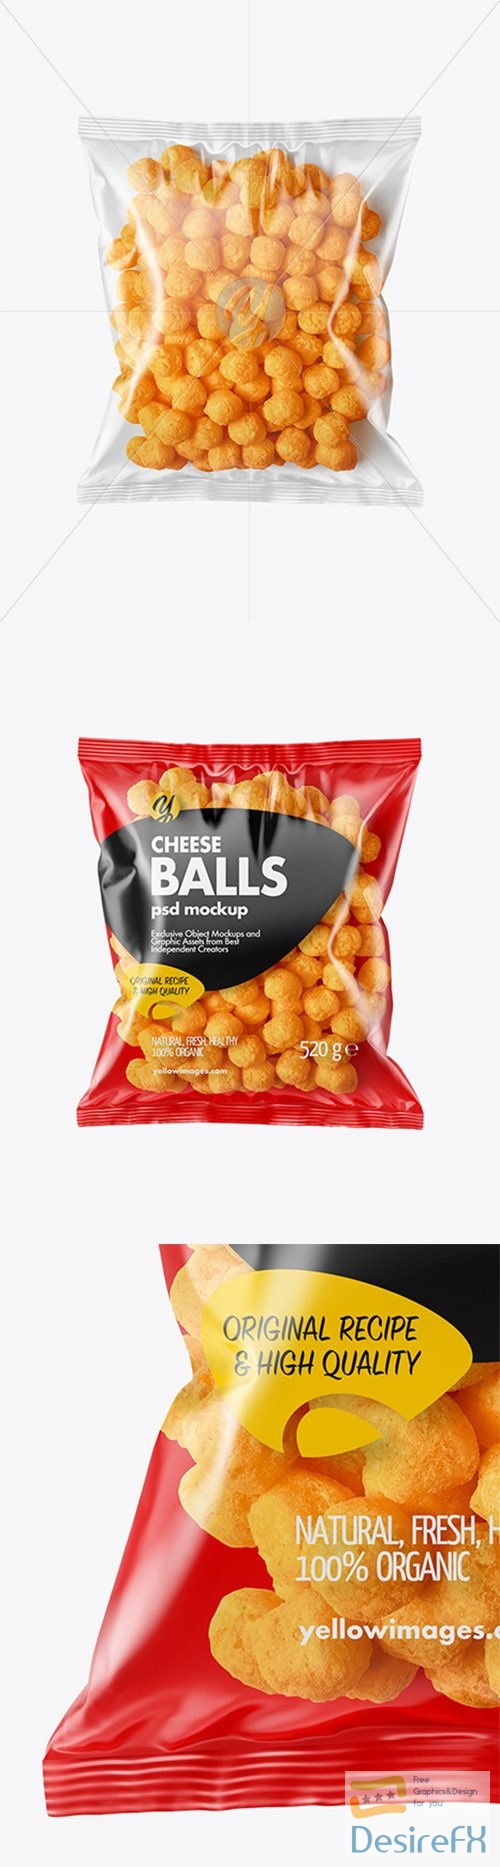 Plastic Bag With Cheese Balls Mockup 79795 TIF